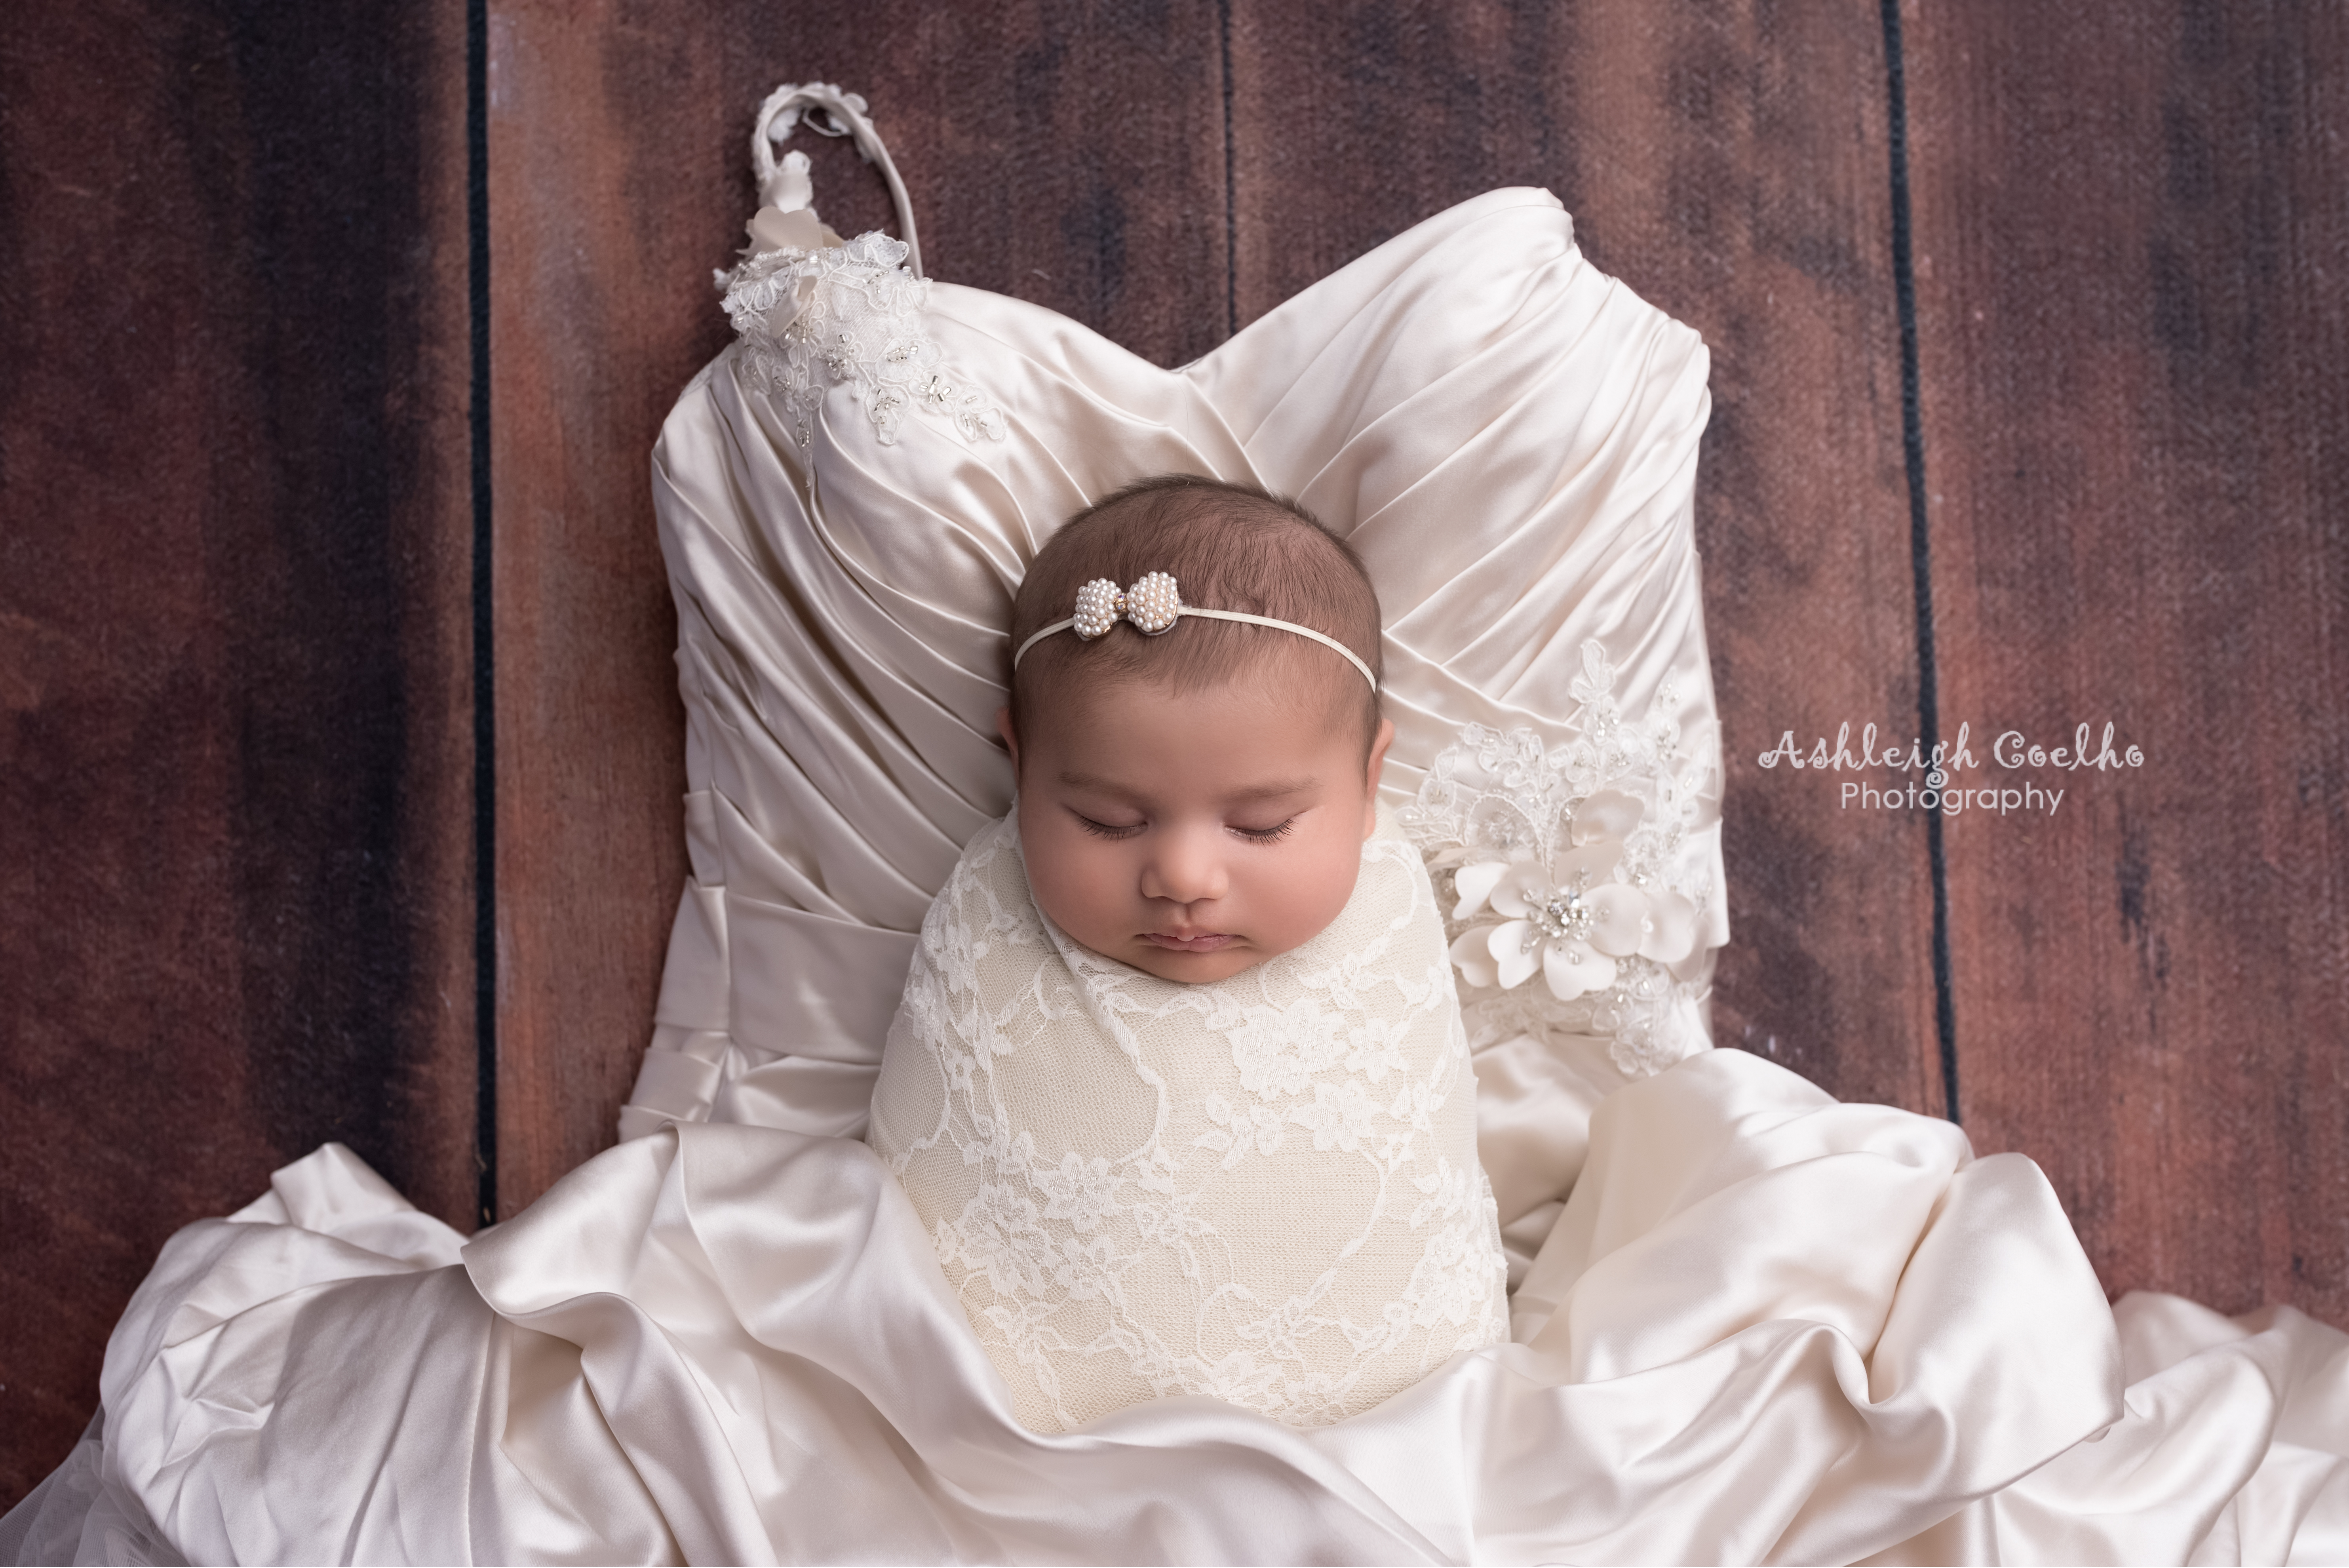 Wedding Newborn Session - Wedding Dress, Veil, Rings, u0026 Accessories -  Ashleigh Coelho Photography McKinney - Ashleigh Coelho Photography -  specializing in newborn, maternity, child, and family.